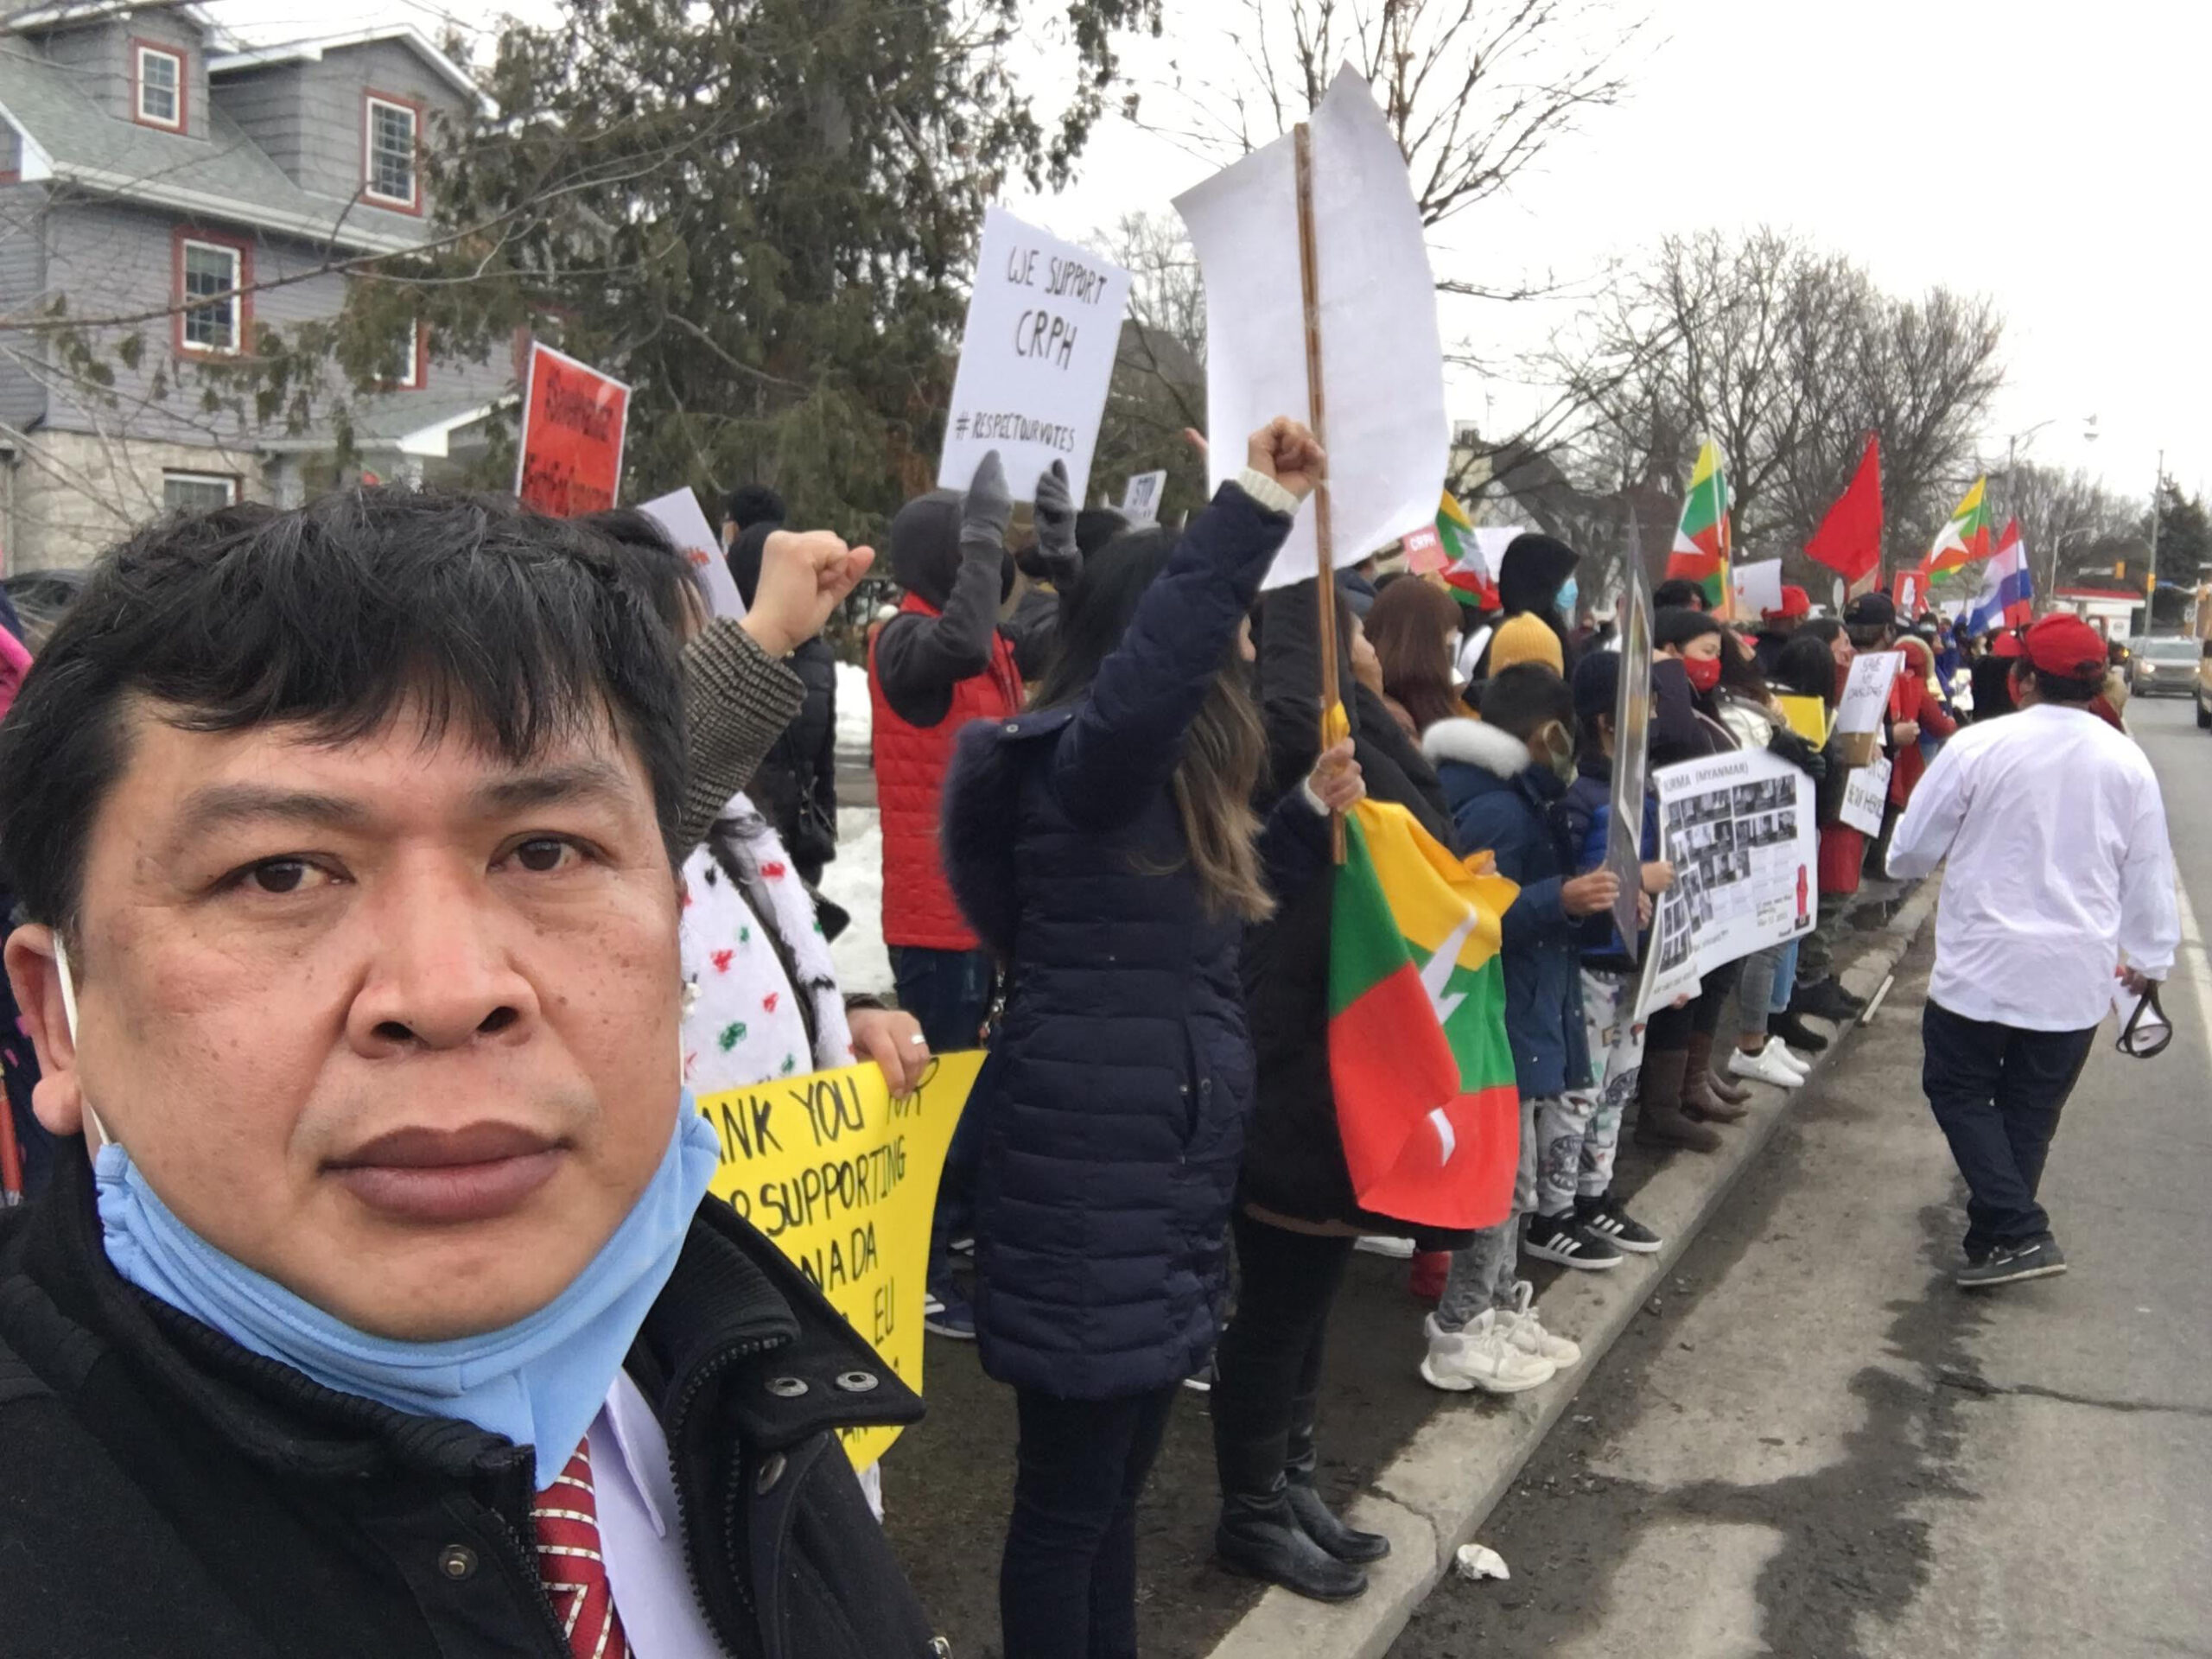 Protestors in Canada march for Myanmar.